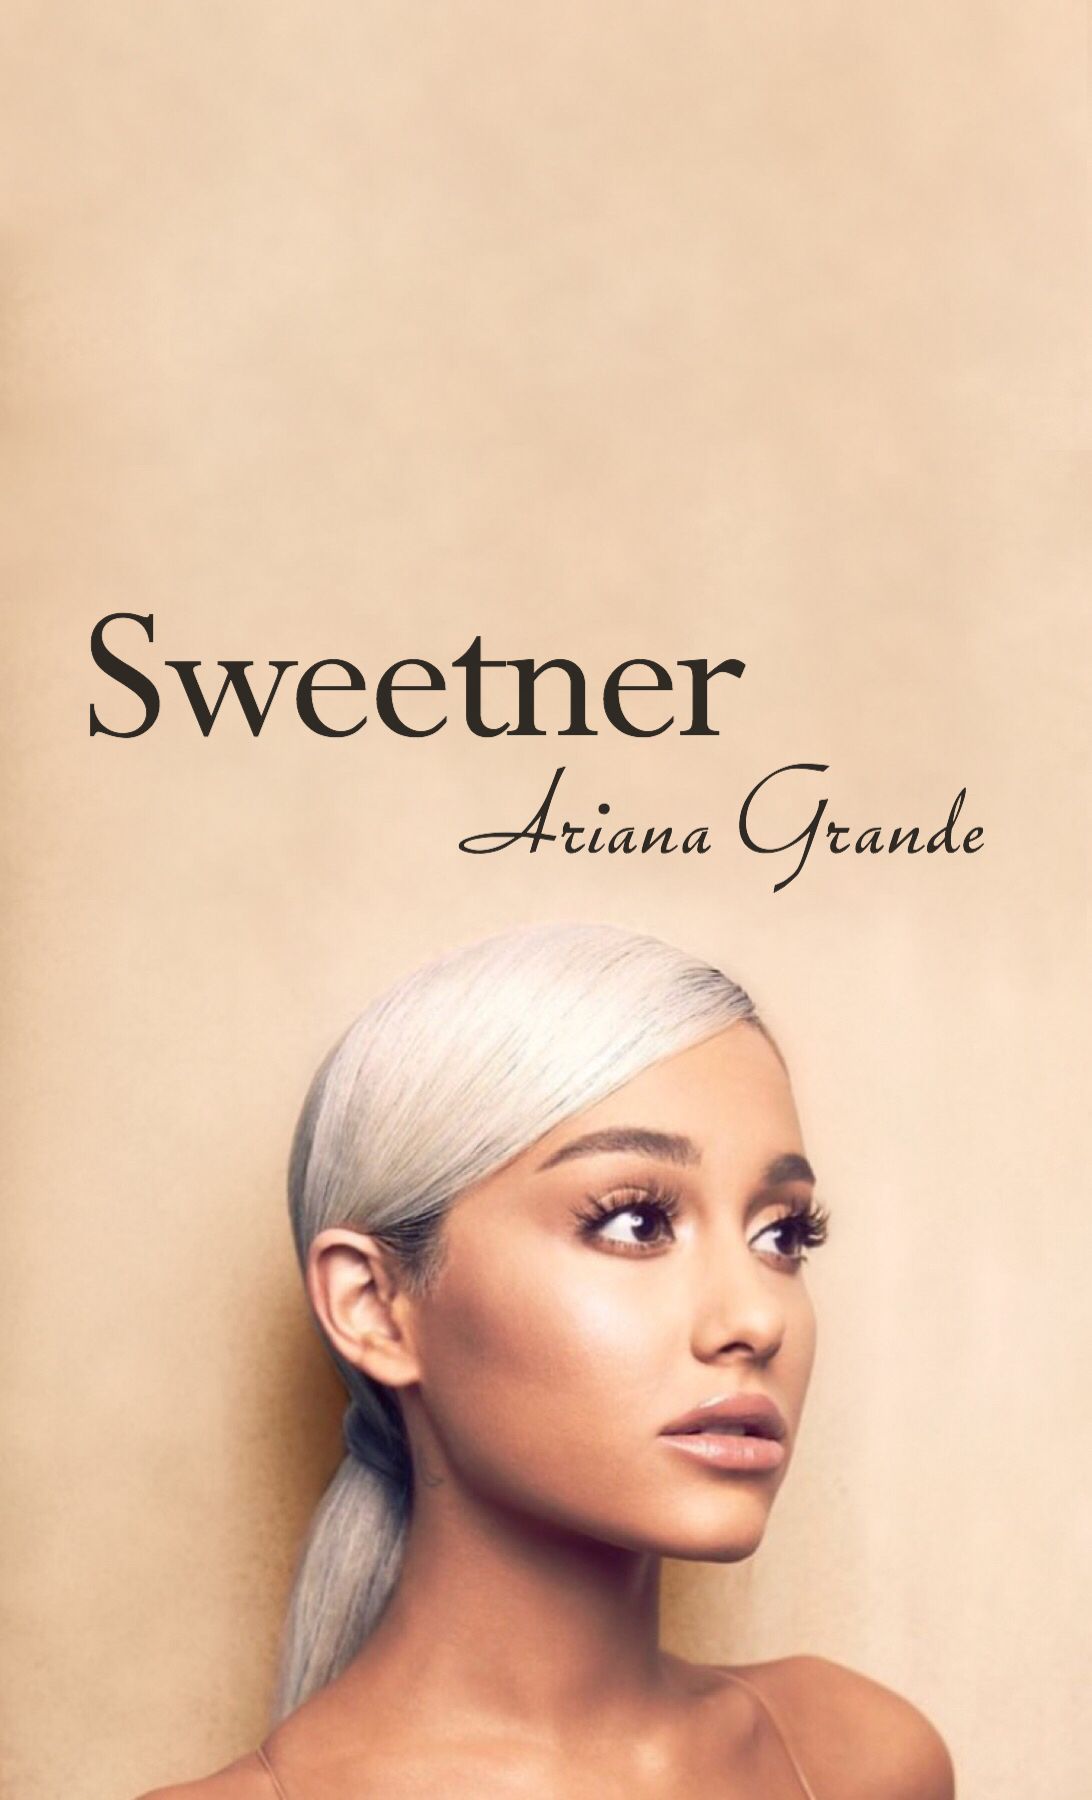 Ariana Grande Sweetener Wallpaper Free Ariana Grande Sweetener Background